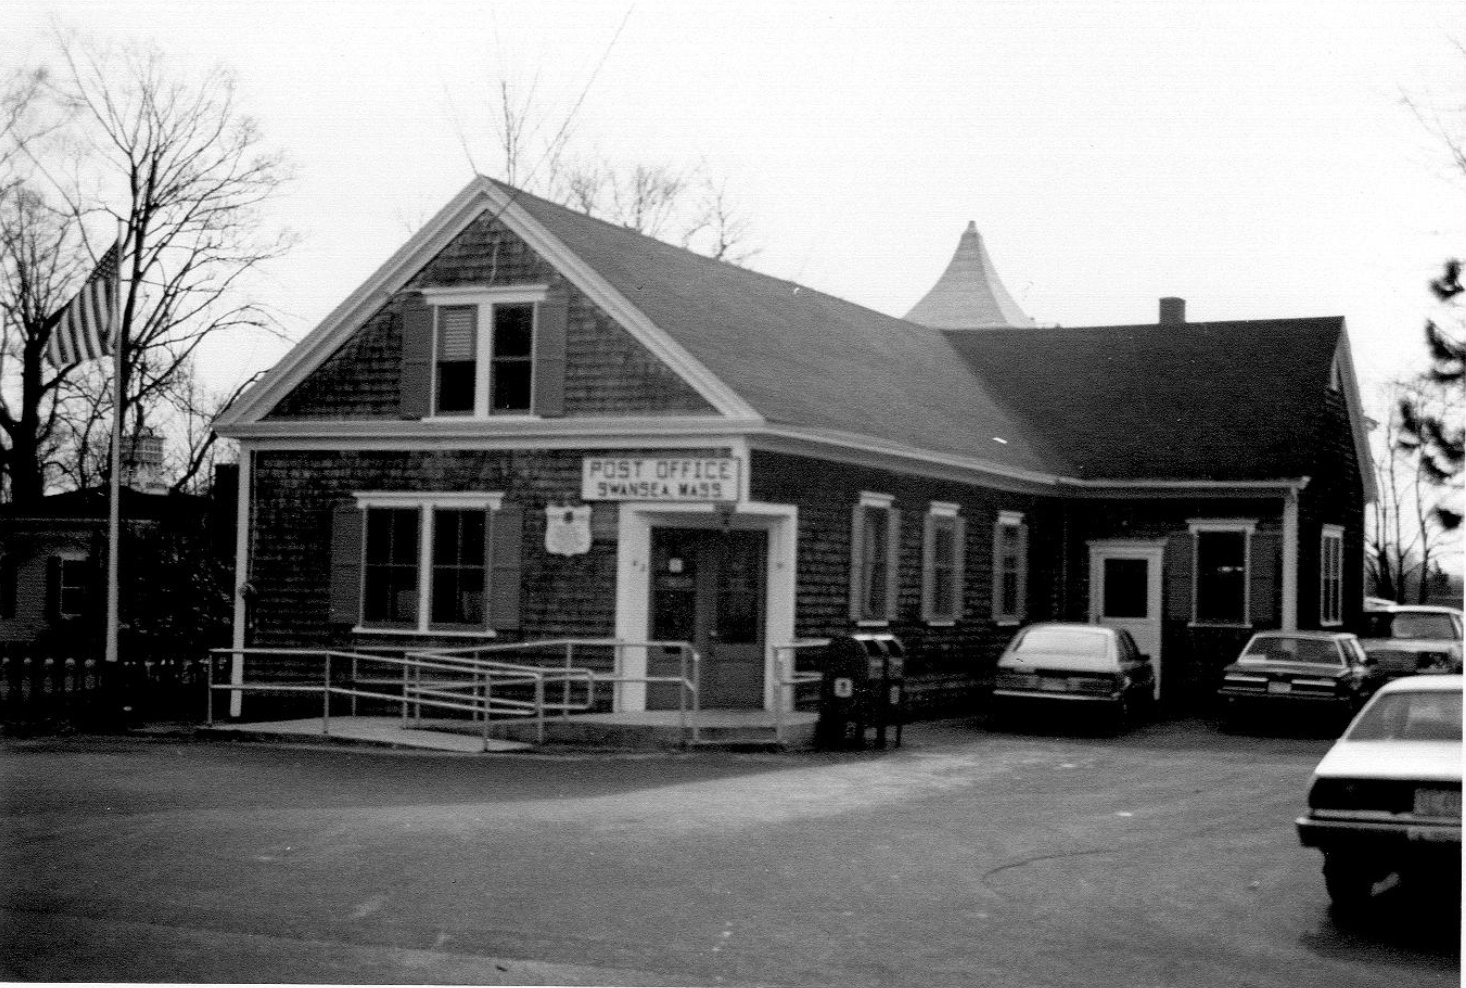 The Village Post Office